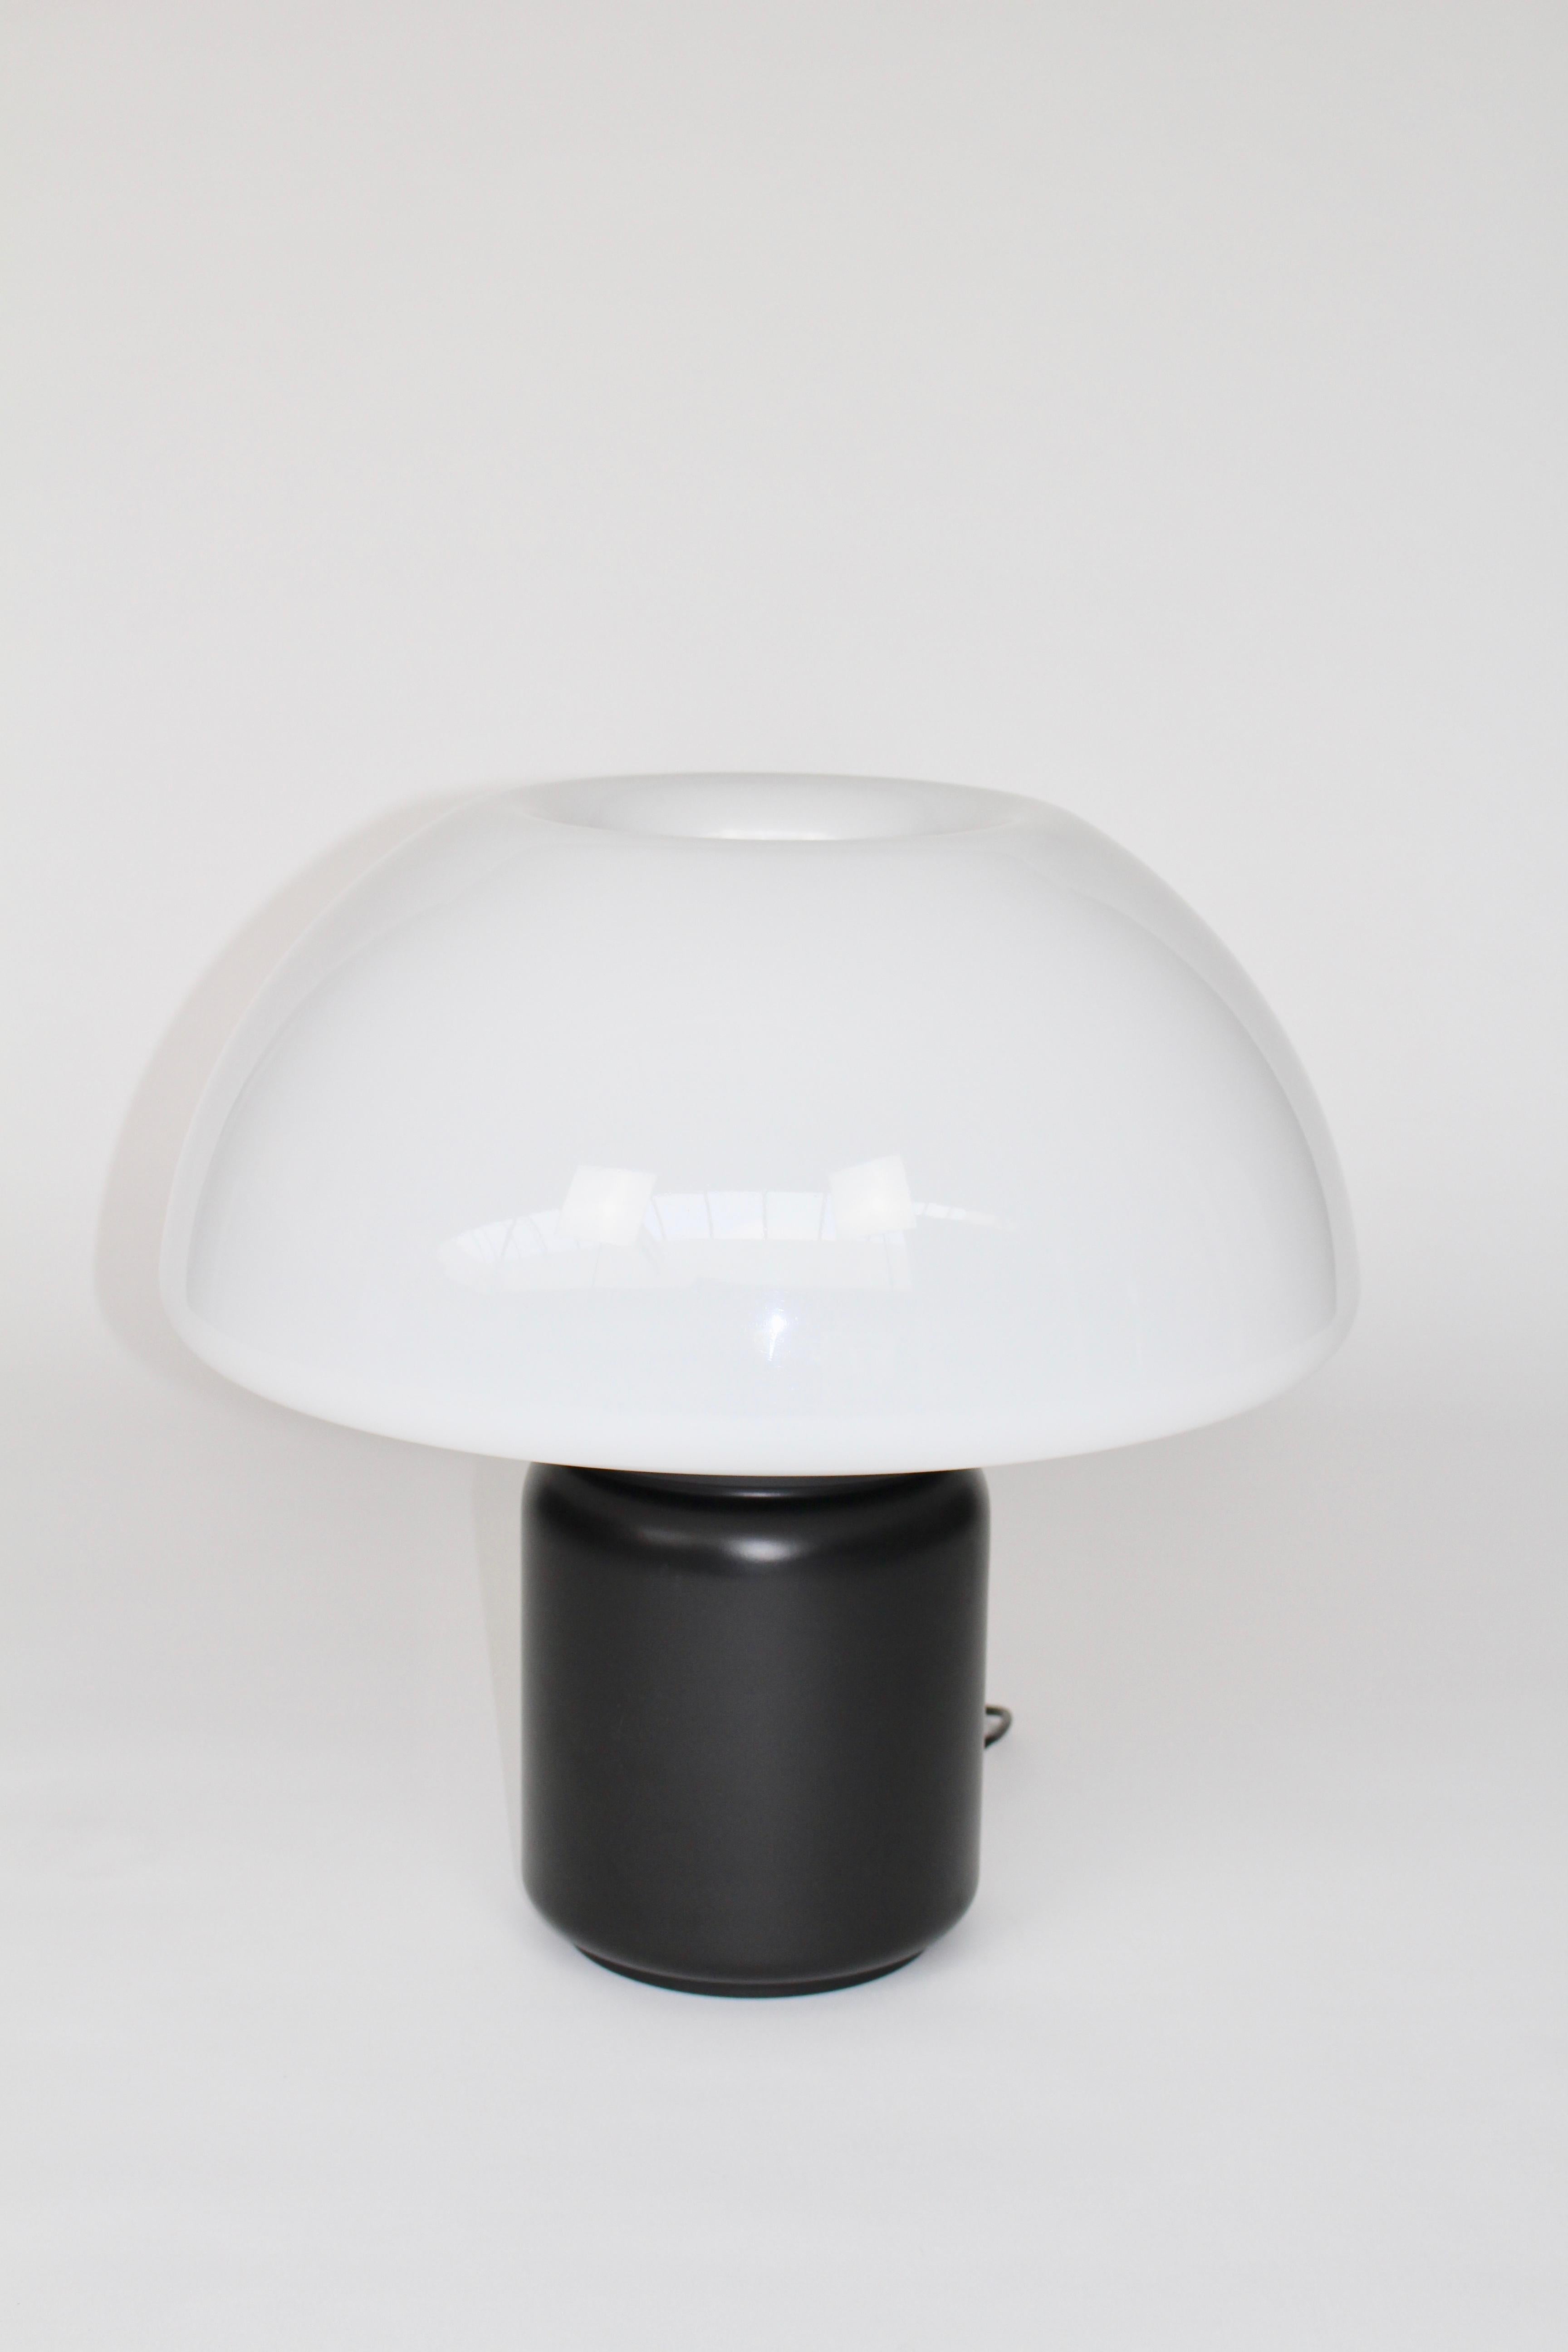 A beautiful mushroom Mod. 625 table lamp by Elio Martinelli.